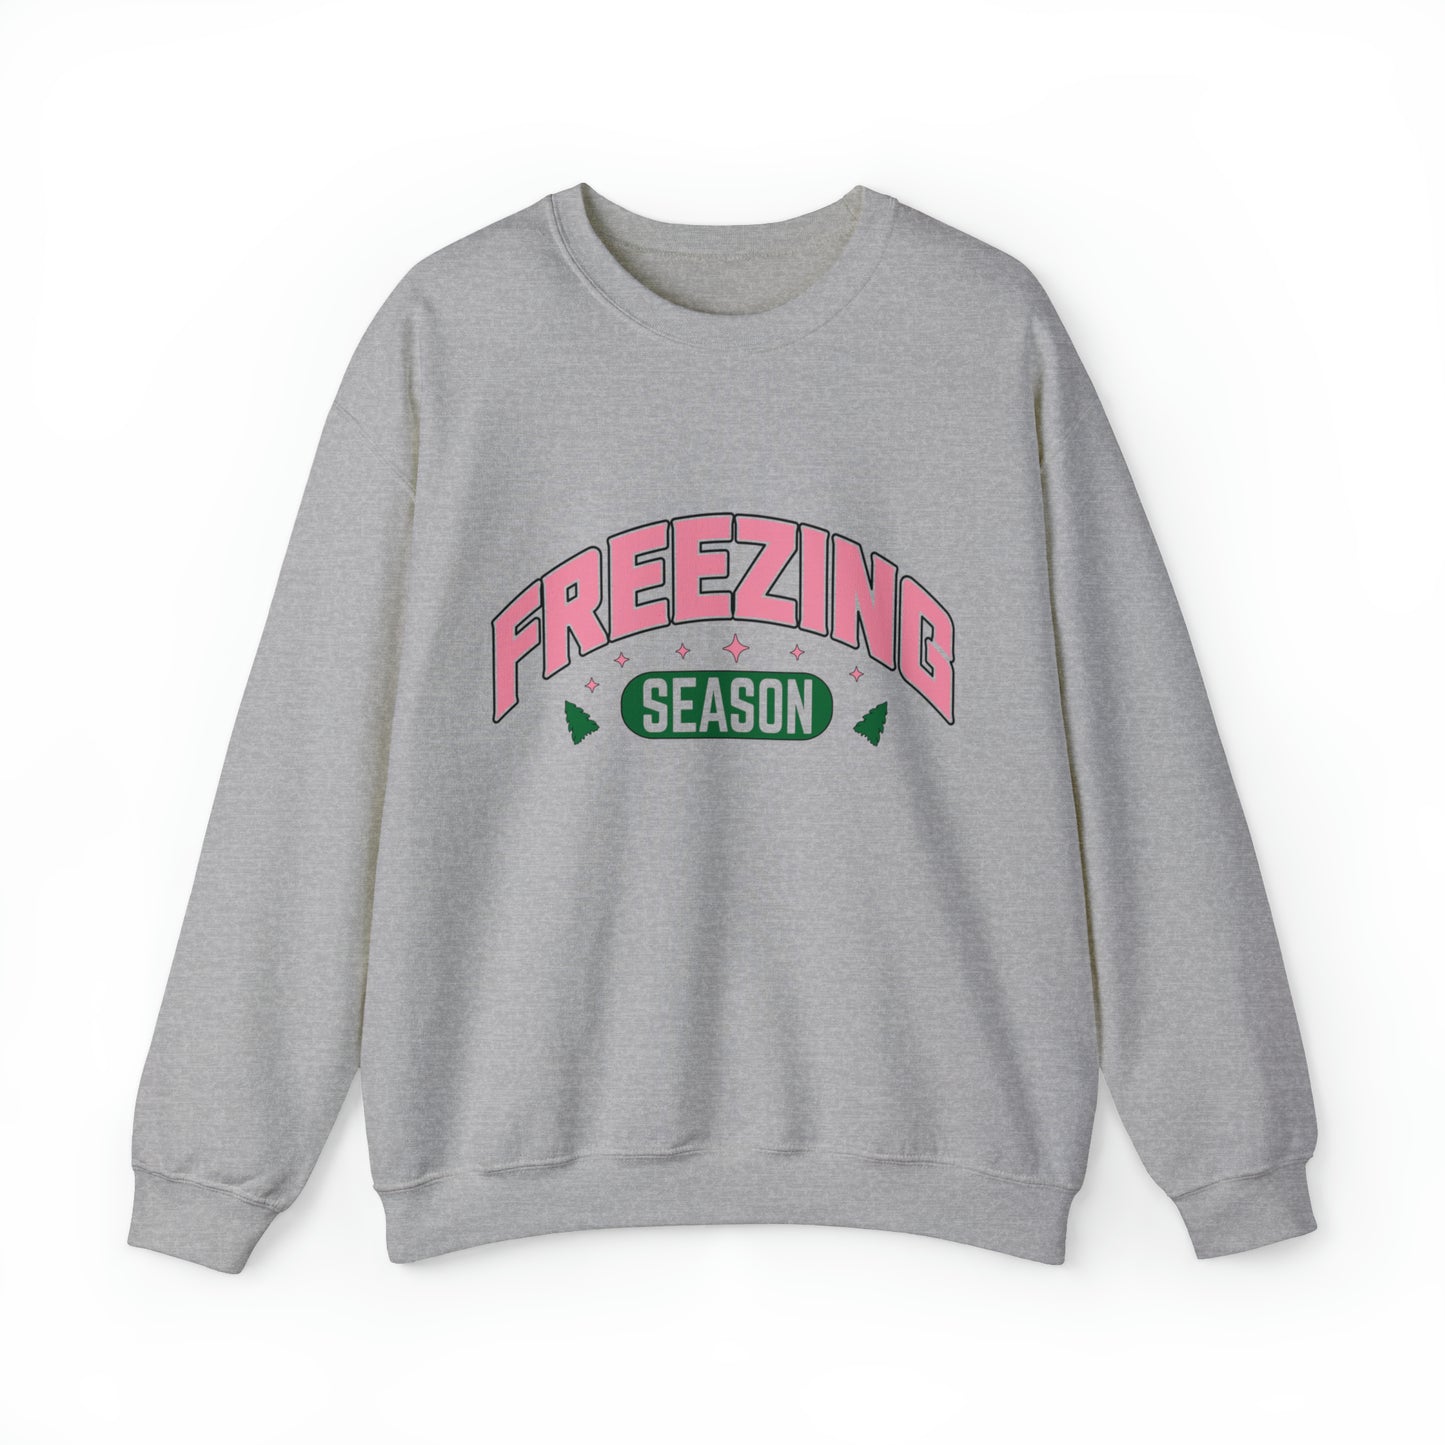 Freezing Season Women's Christmas Winter Crewneck Sweatshirt